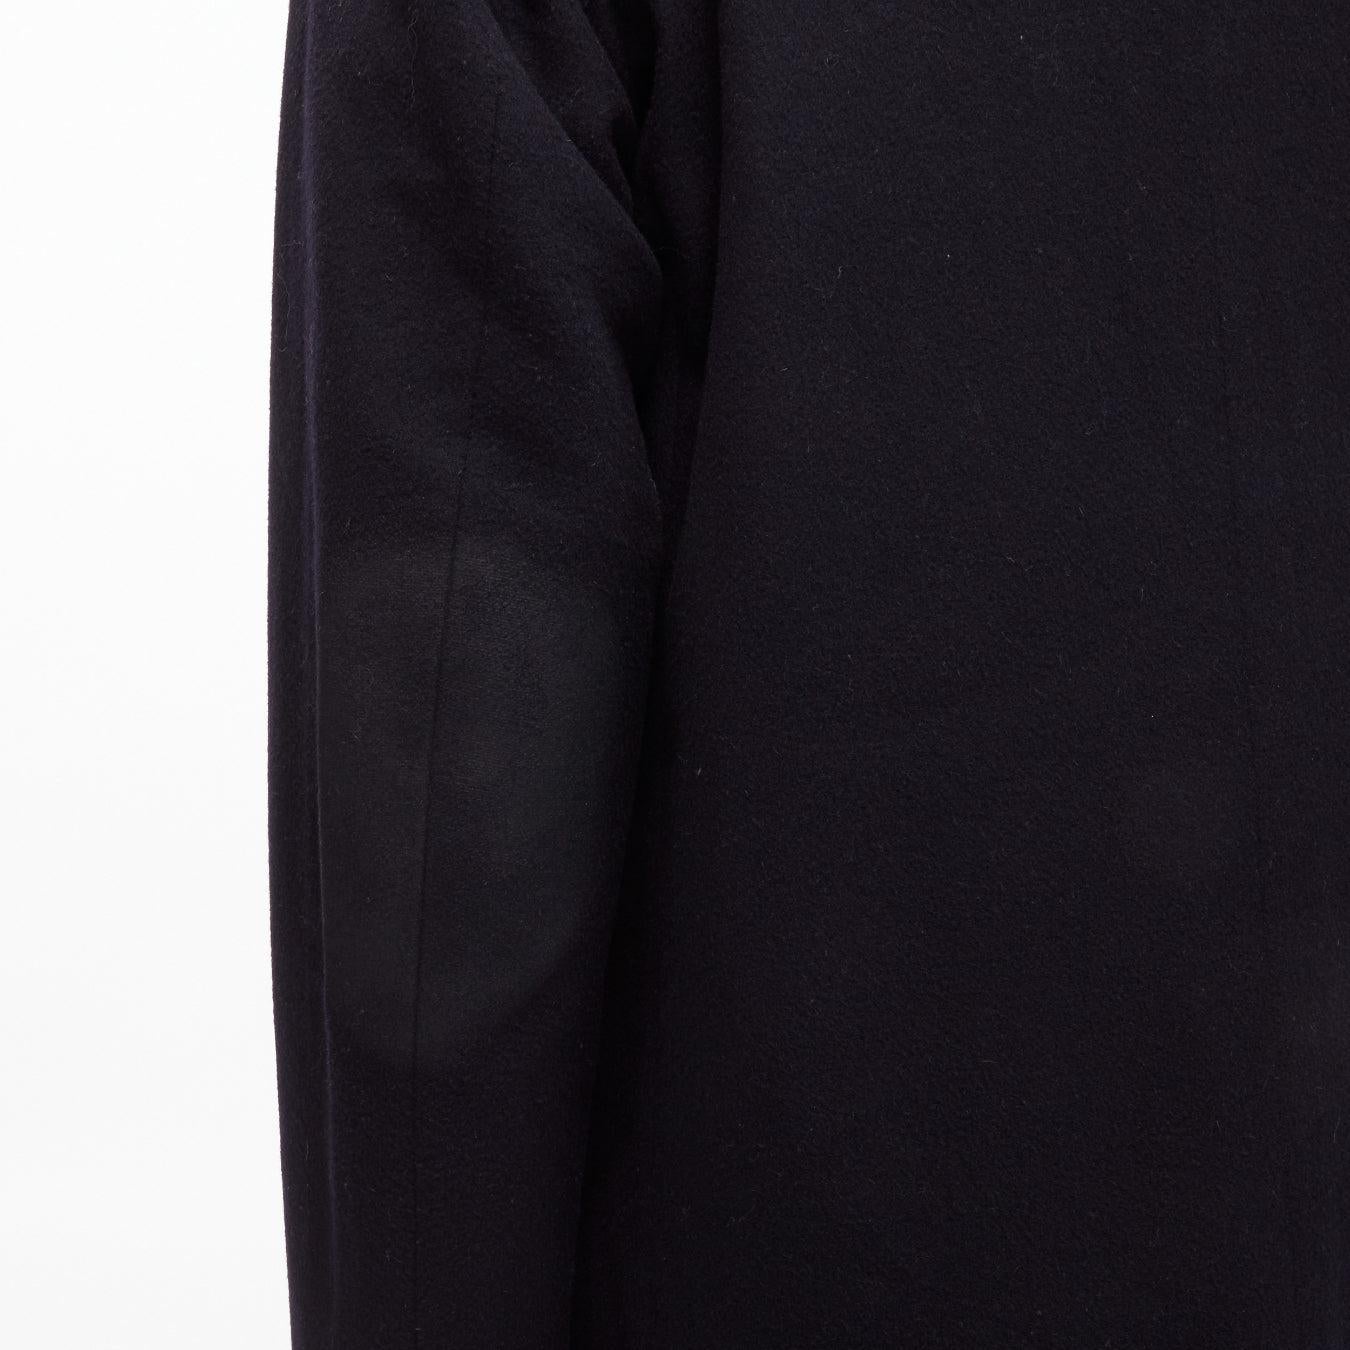 PRADA 2009 100% virgin wool black minimalist coated sleeve coat IT48 M
Reference: YNWG/A00184
Brand: Prada
Designer: Miuccia Prada
Collection: 2009
Material: Virgin Wool
Color: Black
Pattern: Solid
Closure: Zip
Lining: Black Fabric
Extra Details: